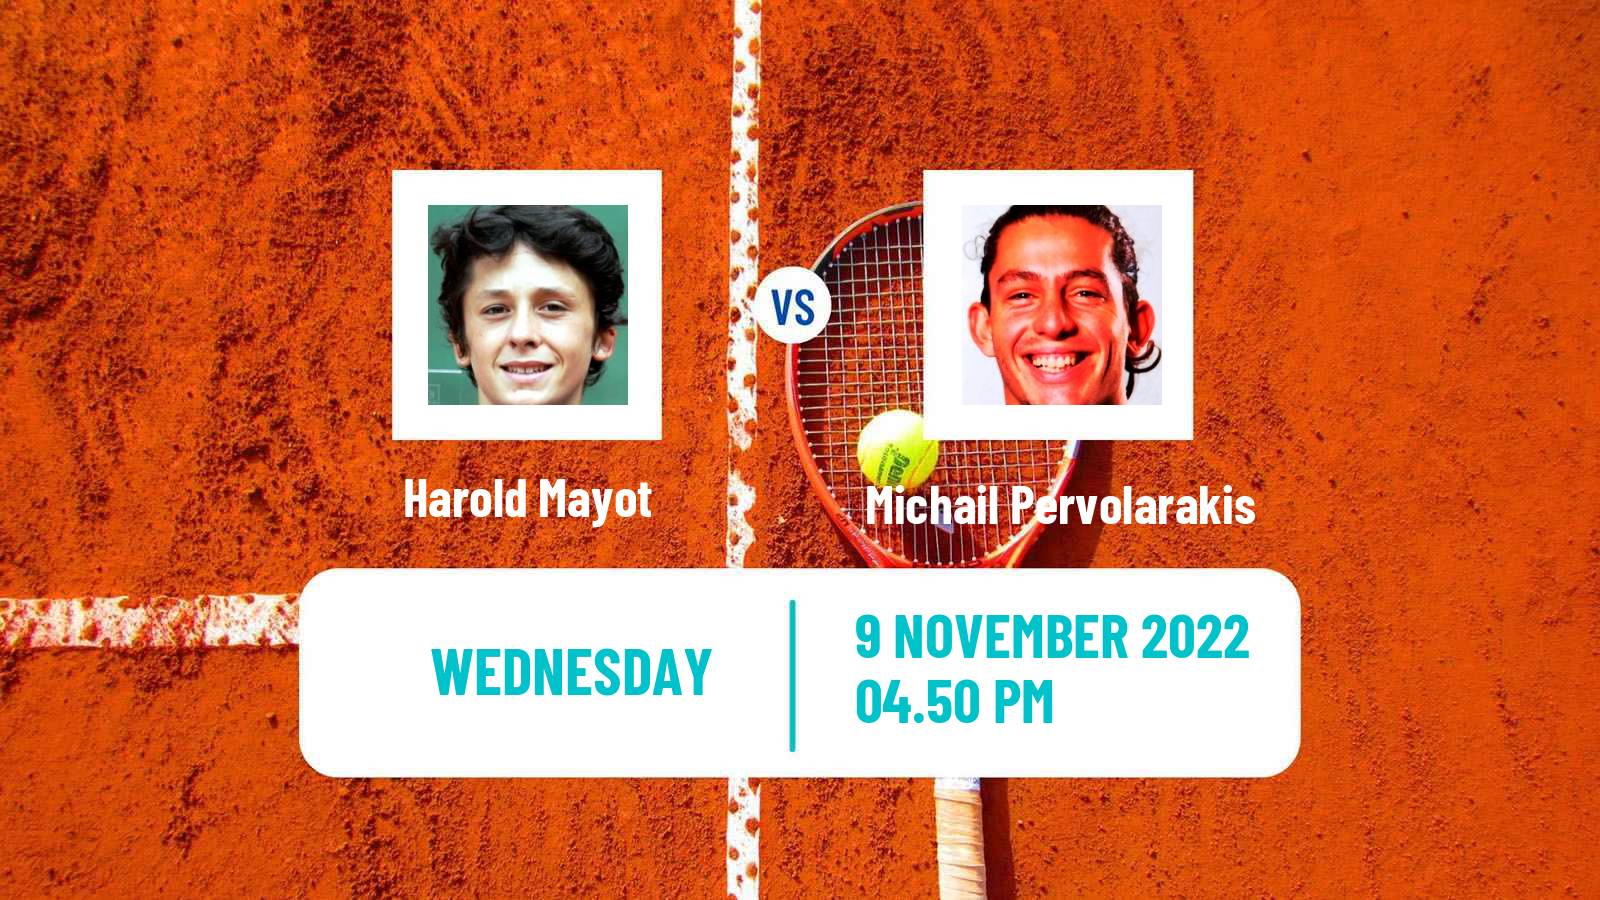 Tennis ATP Challenger Harold Mayot - Michail Pervolarakis